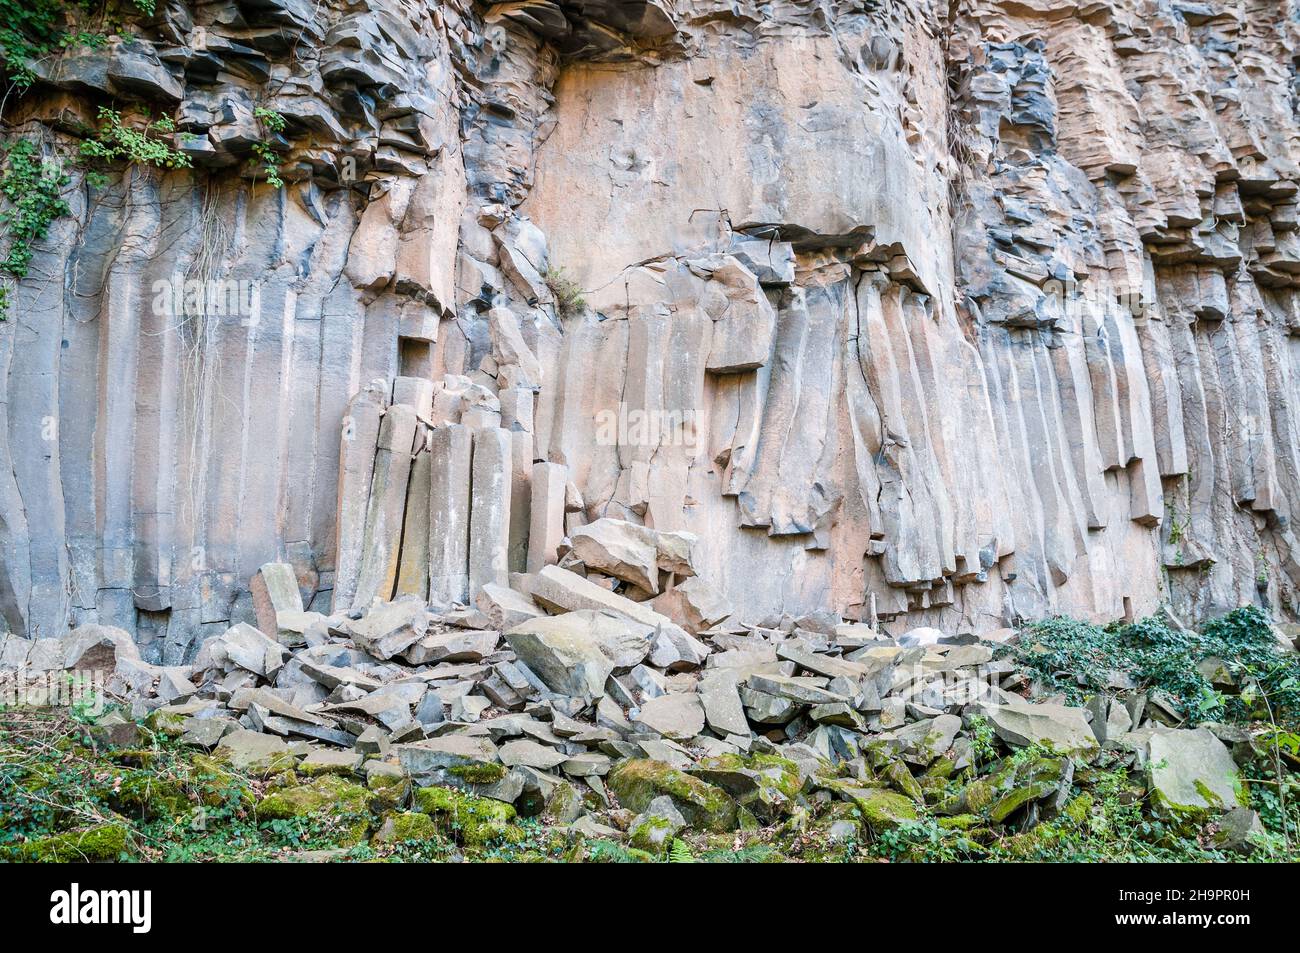 Columnas de lava verticales, flujo de lava antigua, columna de basalto, forma hexagonal, Sant Joan les Fonts, Garrotxa, Cataluña, España Foto de stock